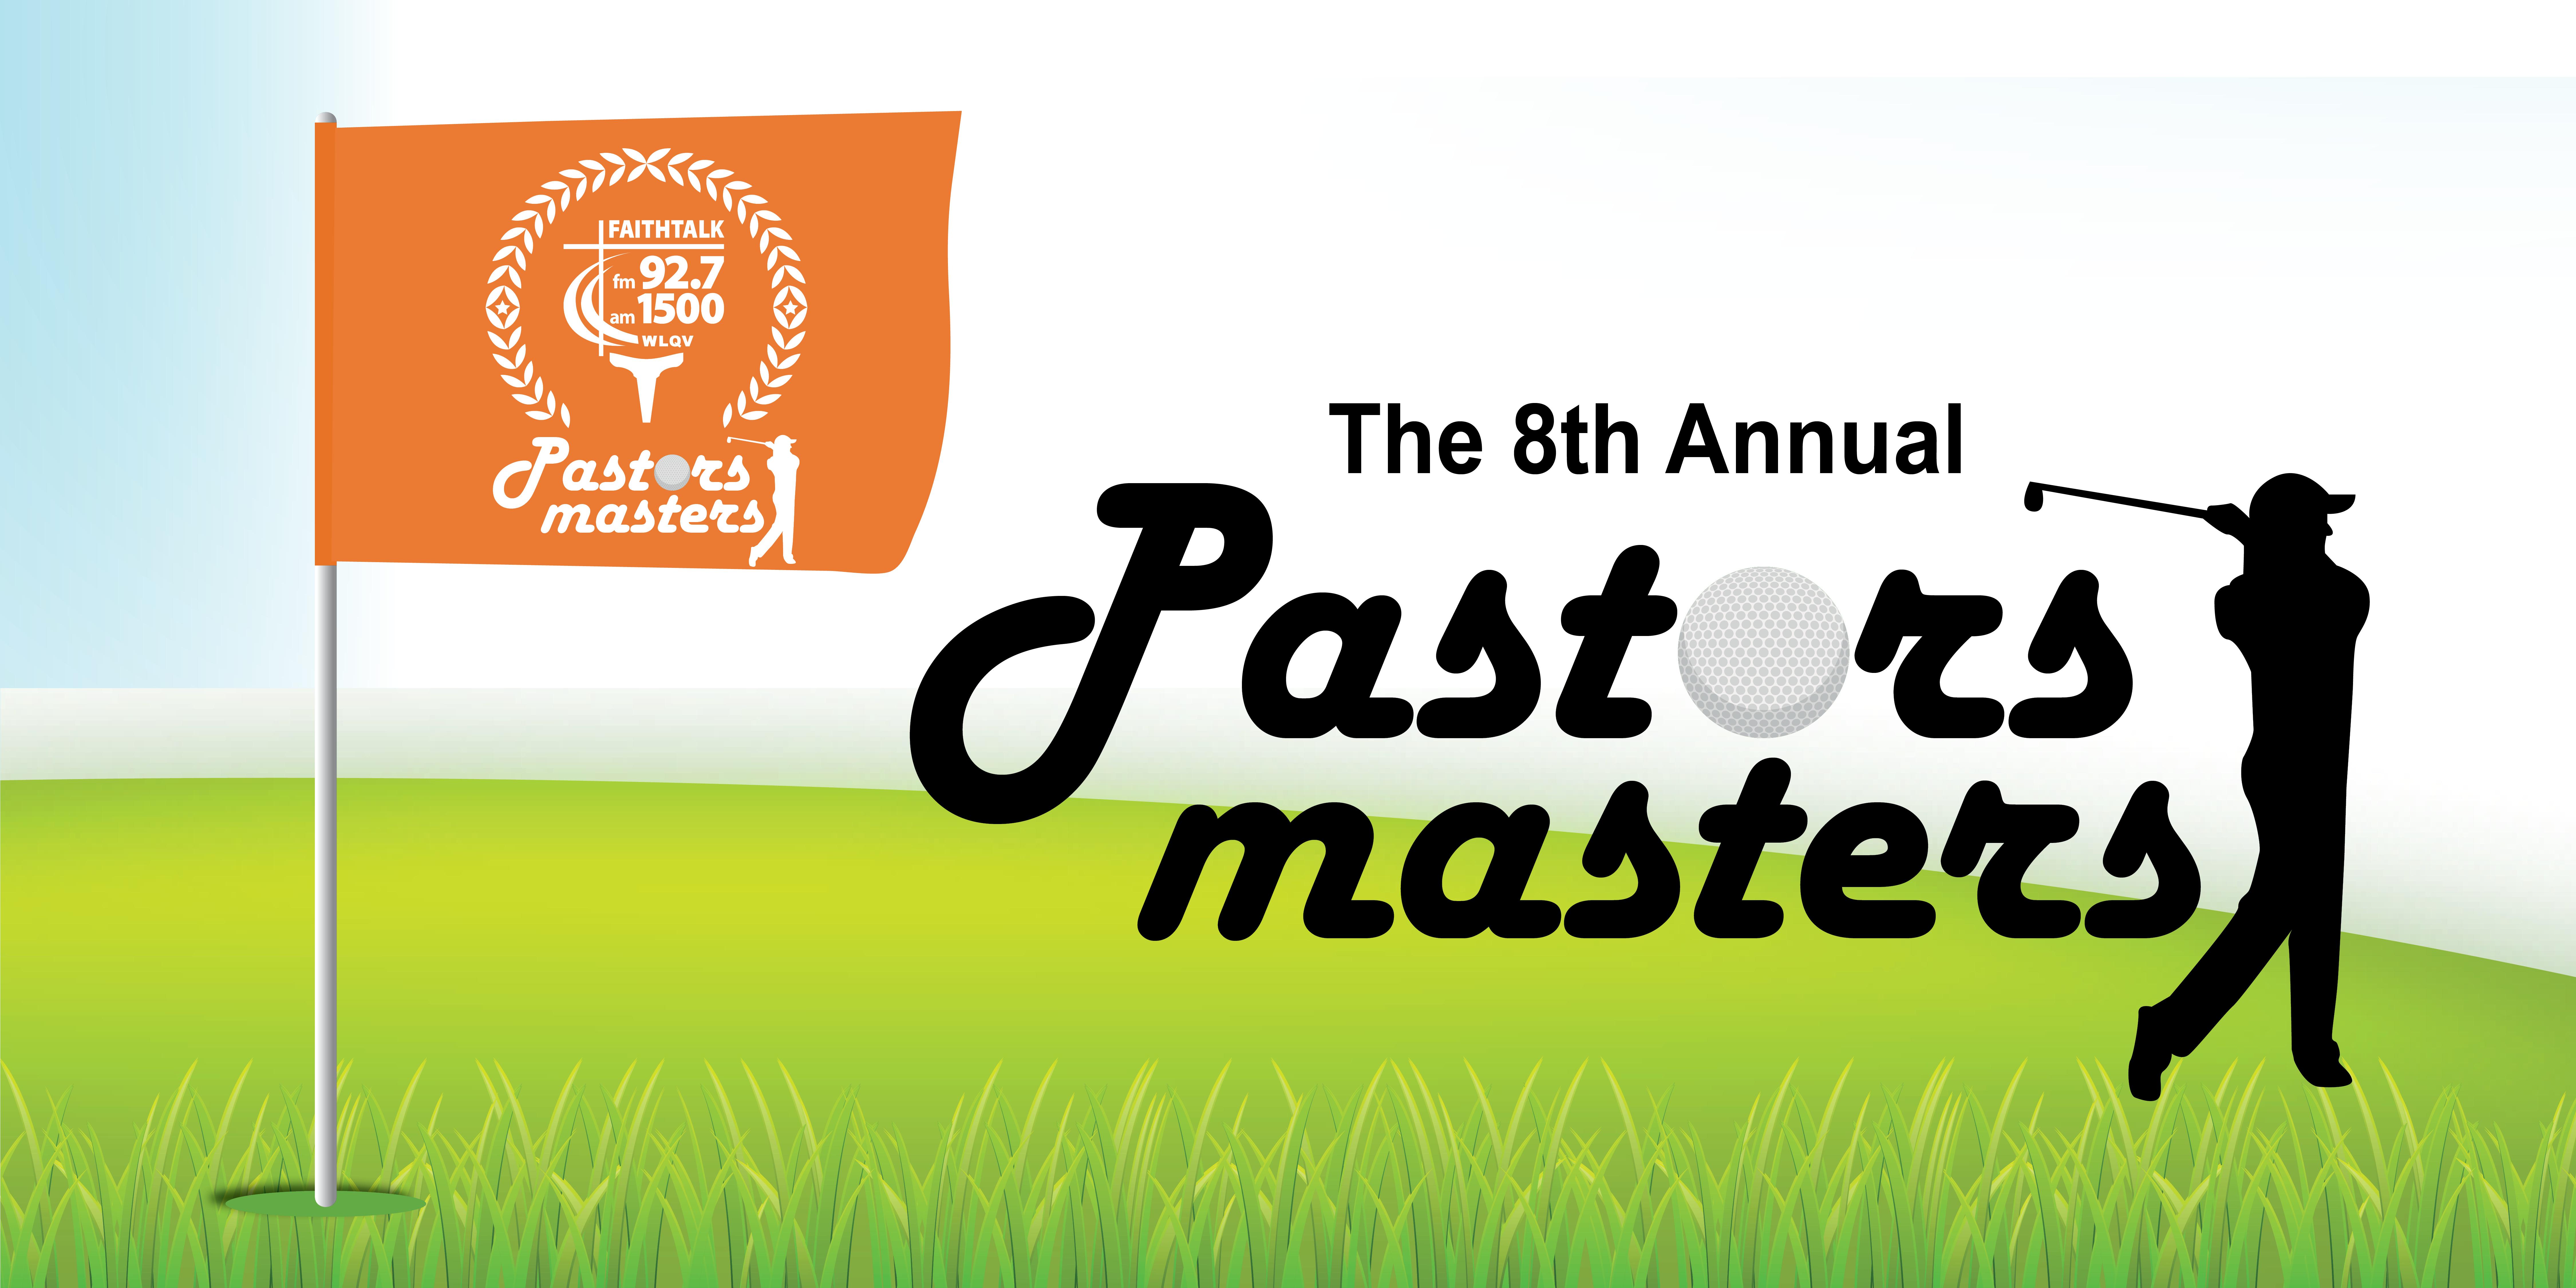 The 8th Annual WLQV Pastors Masters Golf Tournament